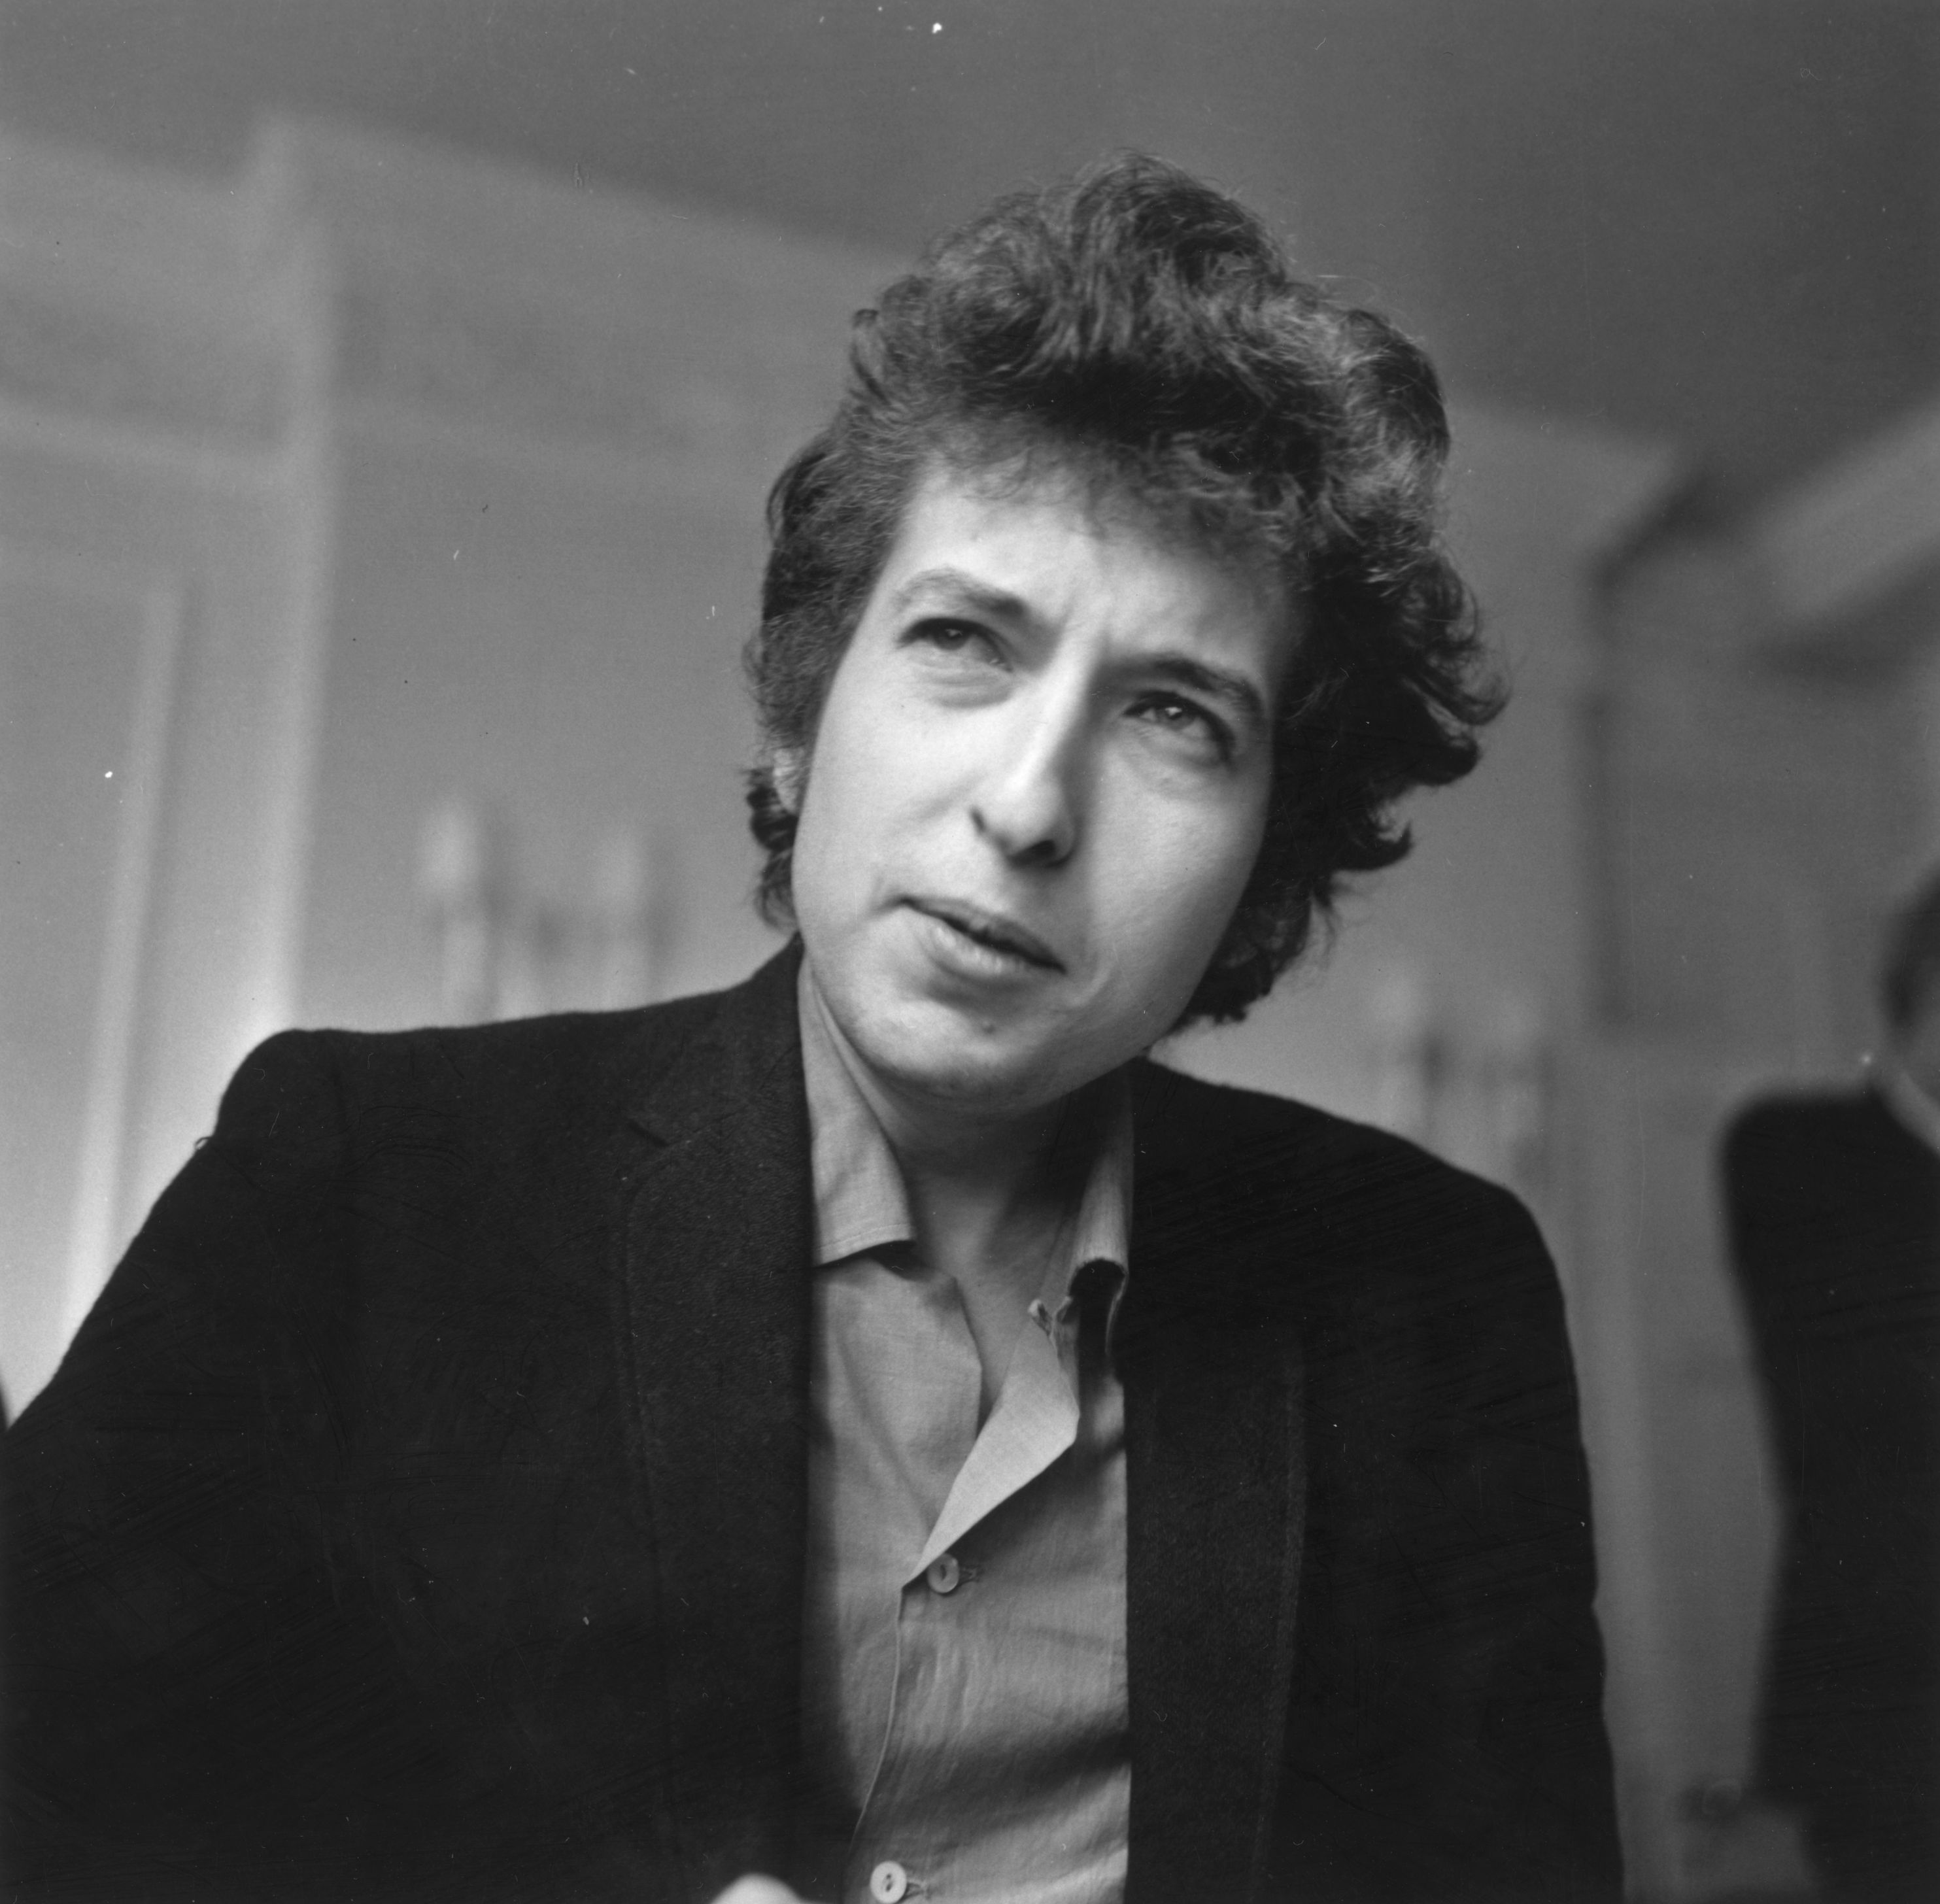 Bob Dylan wearing a suit